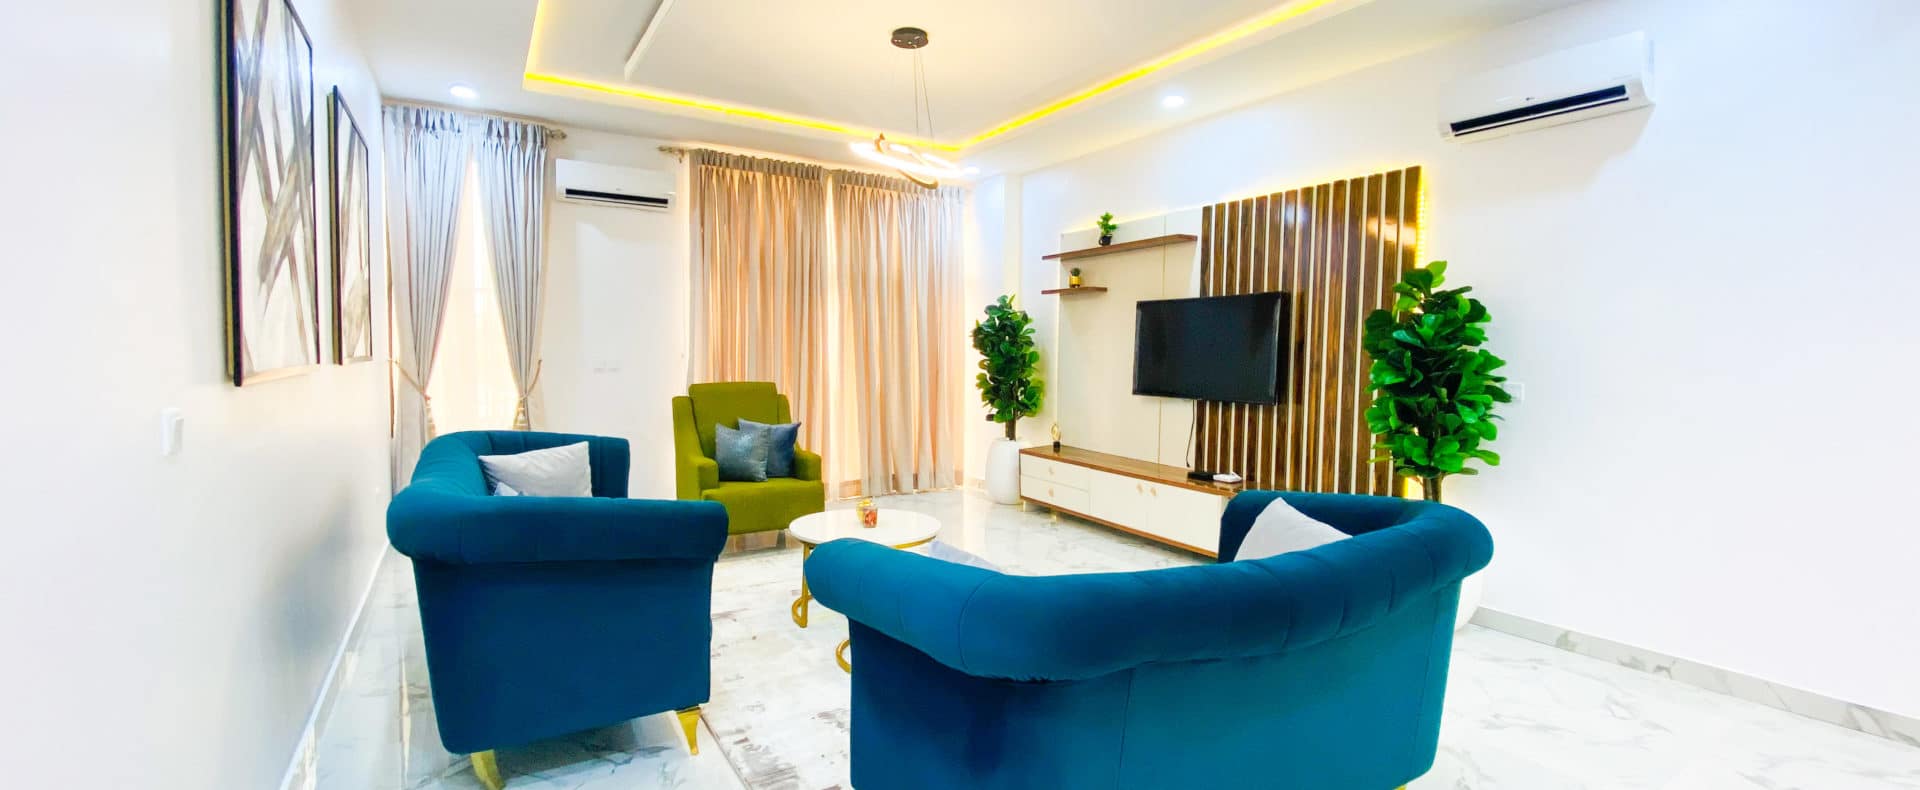 Luxury Private Two Bedroom Apartment In Lekki Short Let In Lagos Nigeria